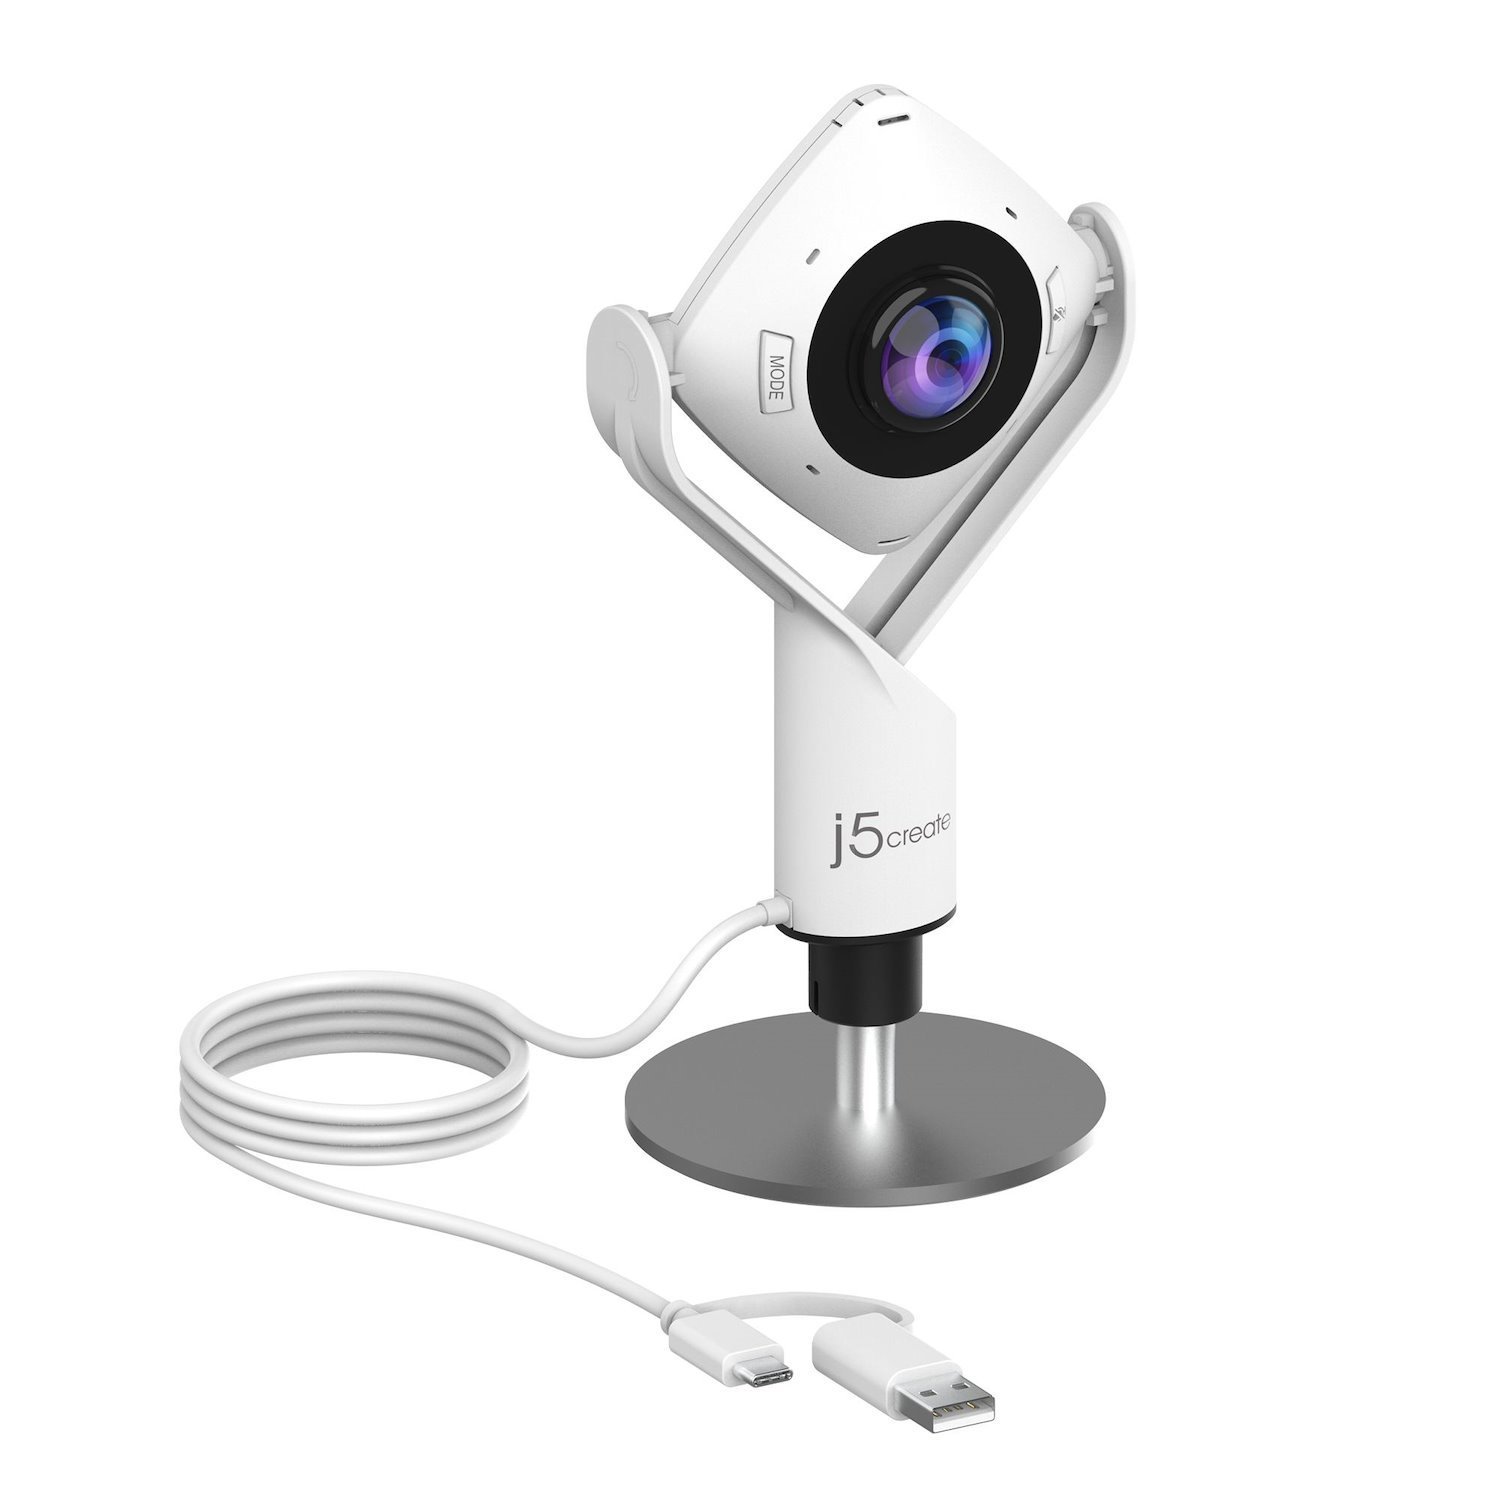 J5create Jvcu360 360° All Around Webcam 1080P Video Capture Resolution White And Black (360 All Around Webcam - )